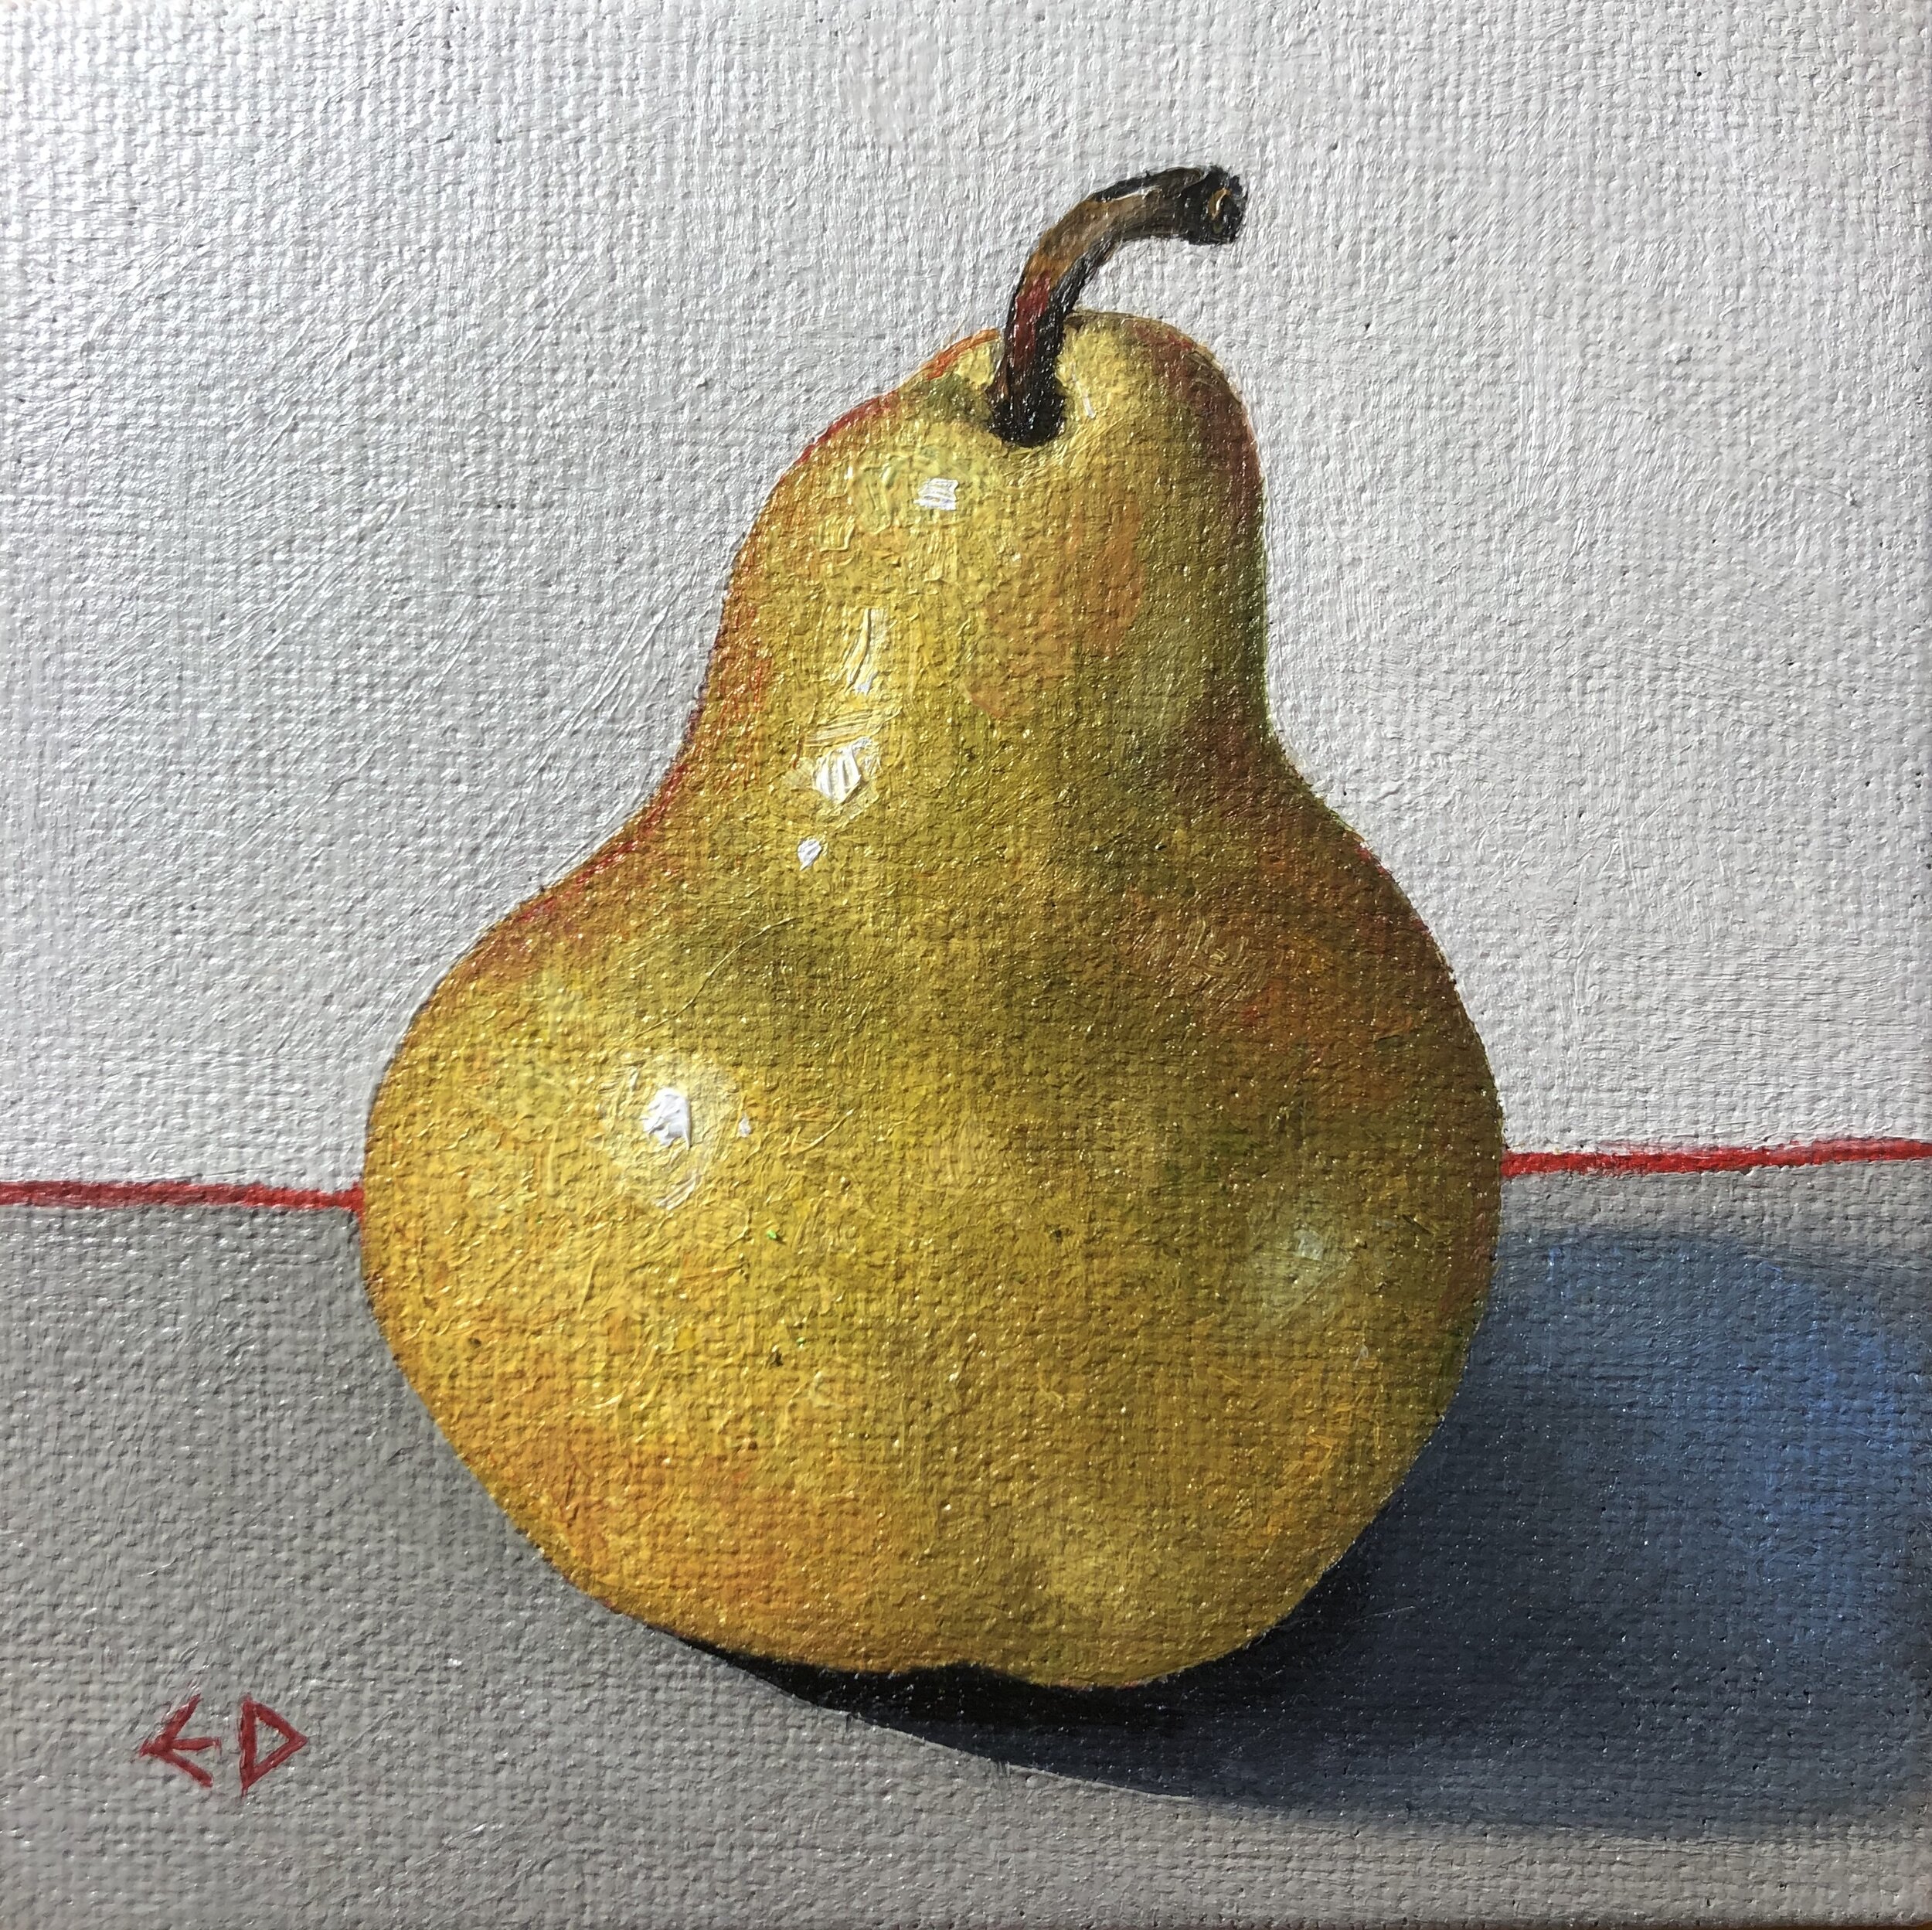 Lone pear